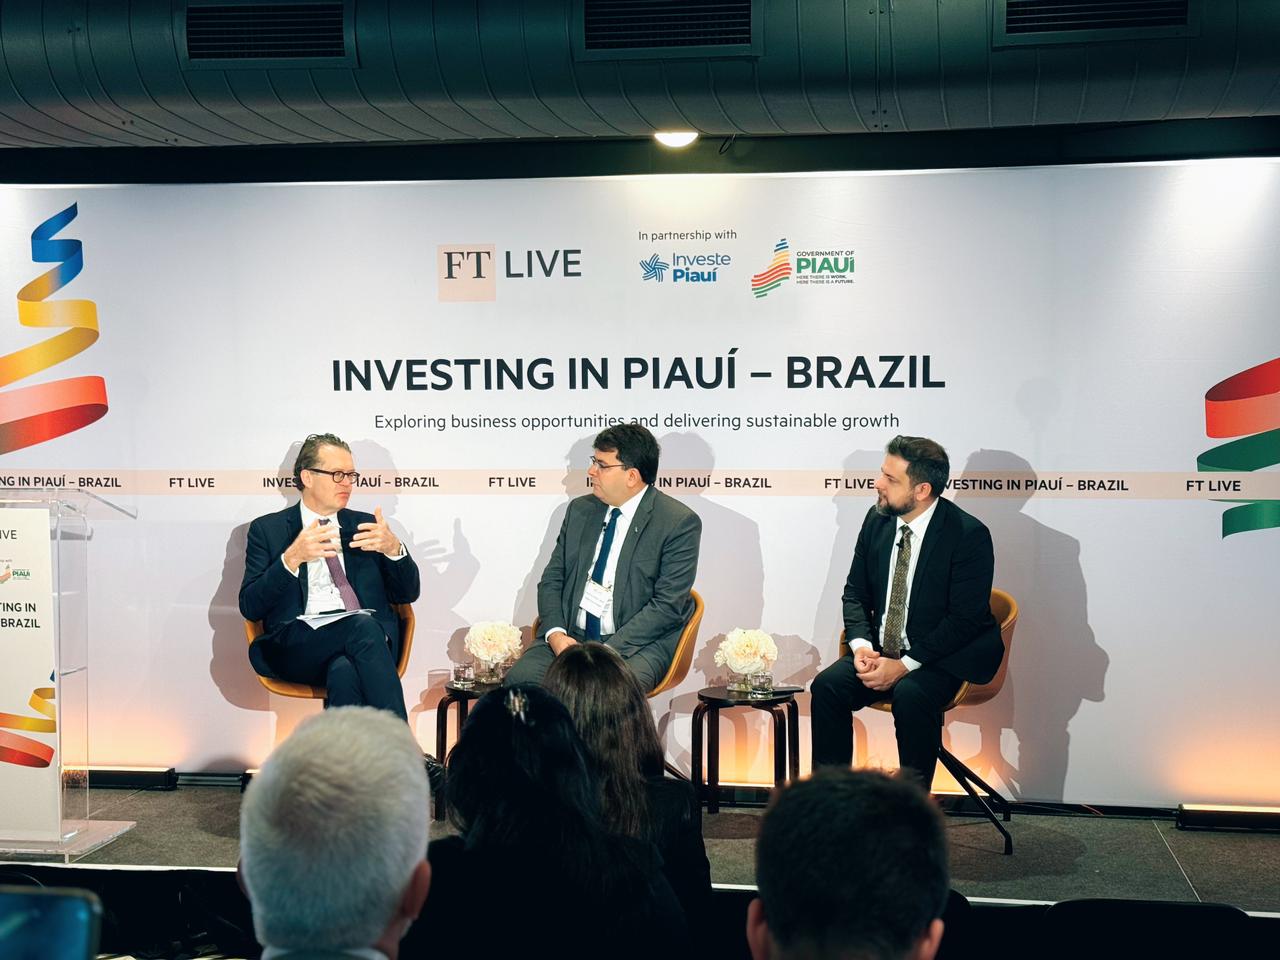 Investing in Piaui - Brazil10.jpg